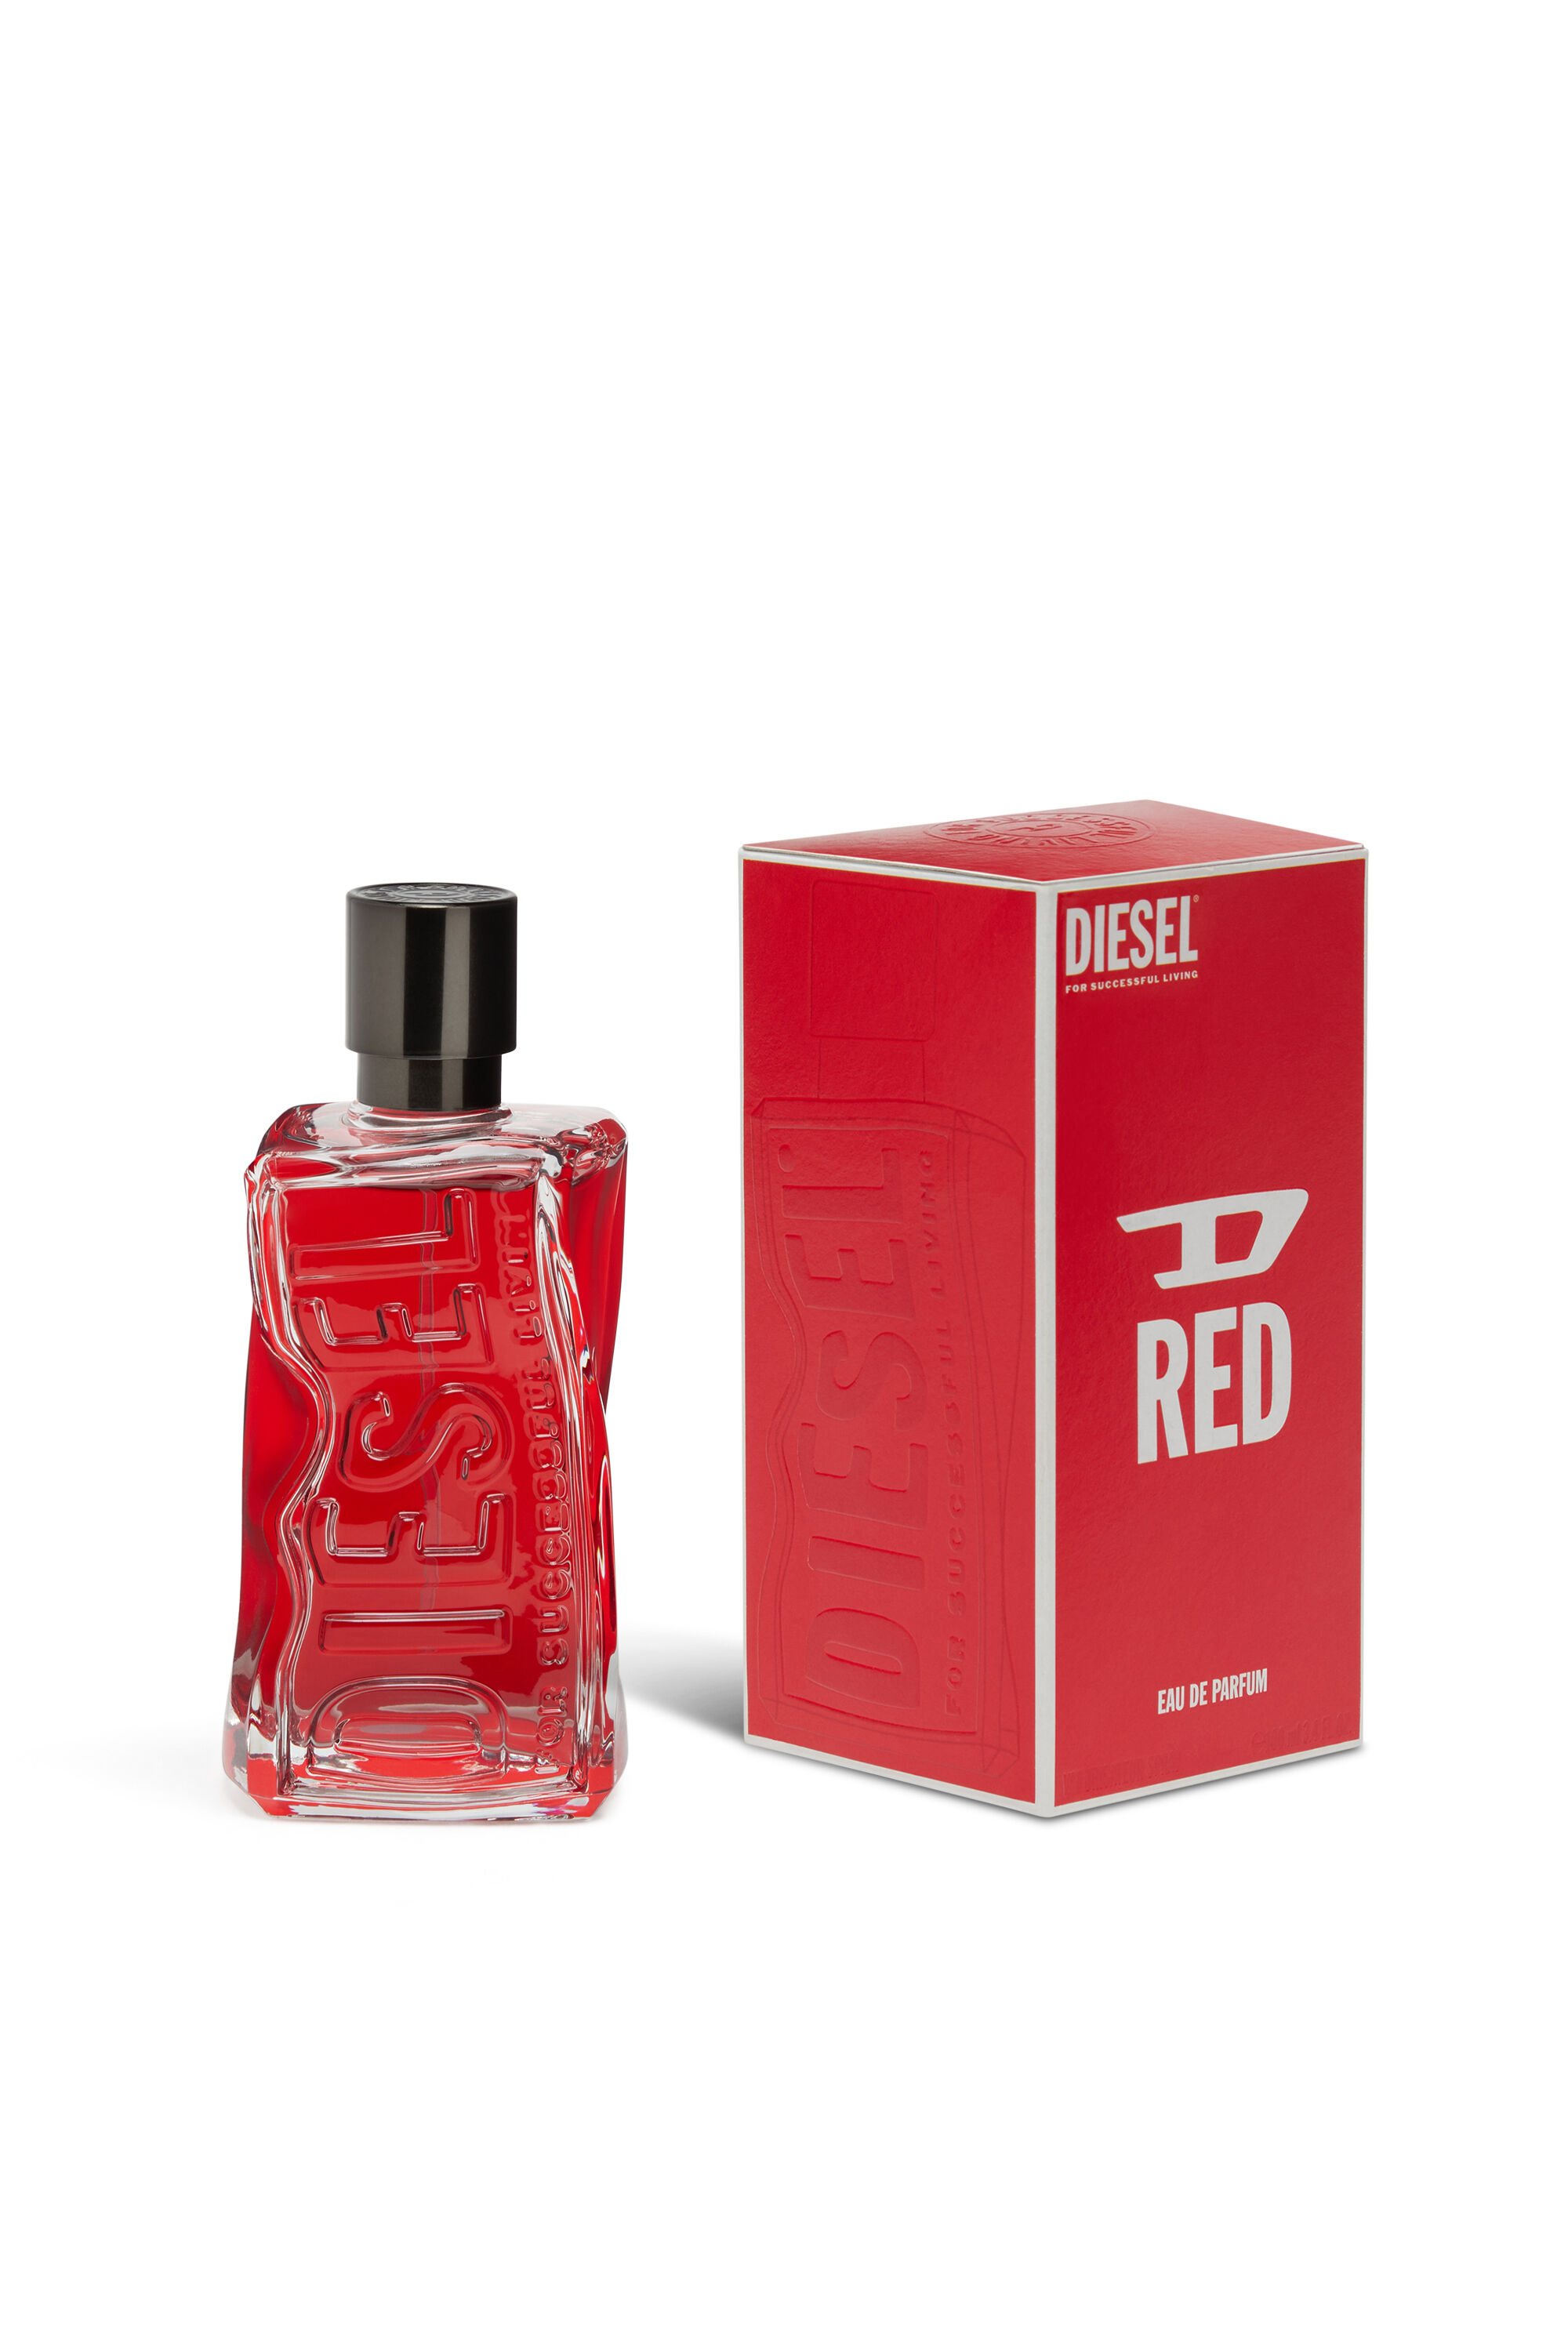 Diesel - D RED 50 ML, Male D RED 50ml, 1.7 FL.OZ., Eau de Parfum in レッド - Image 2